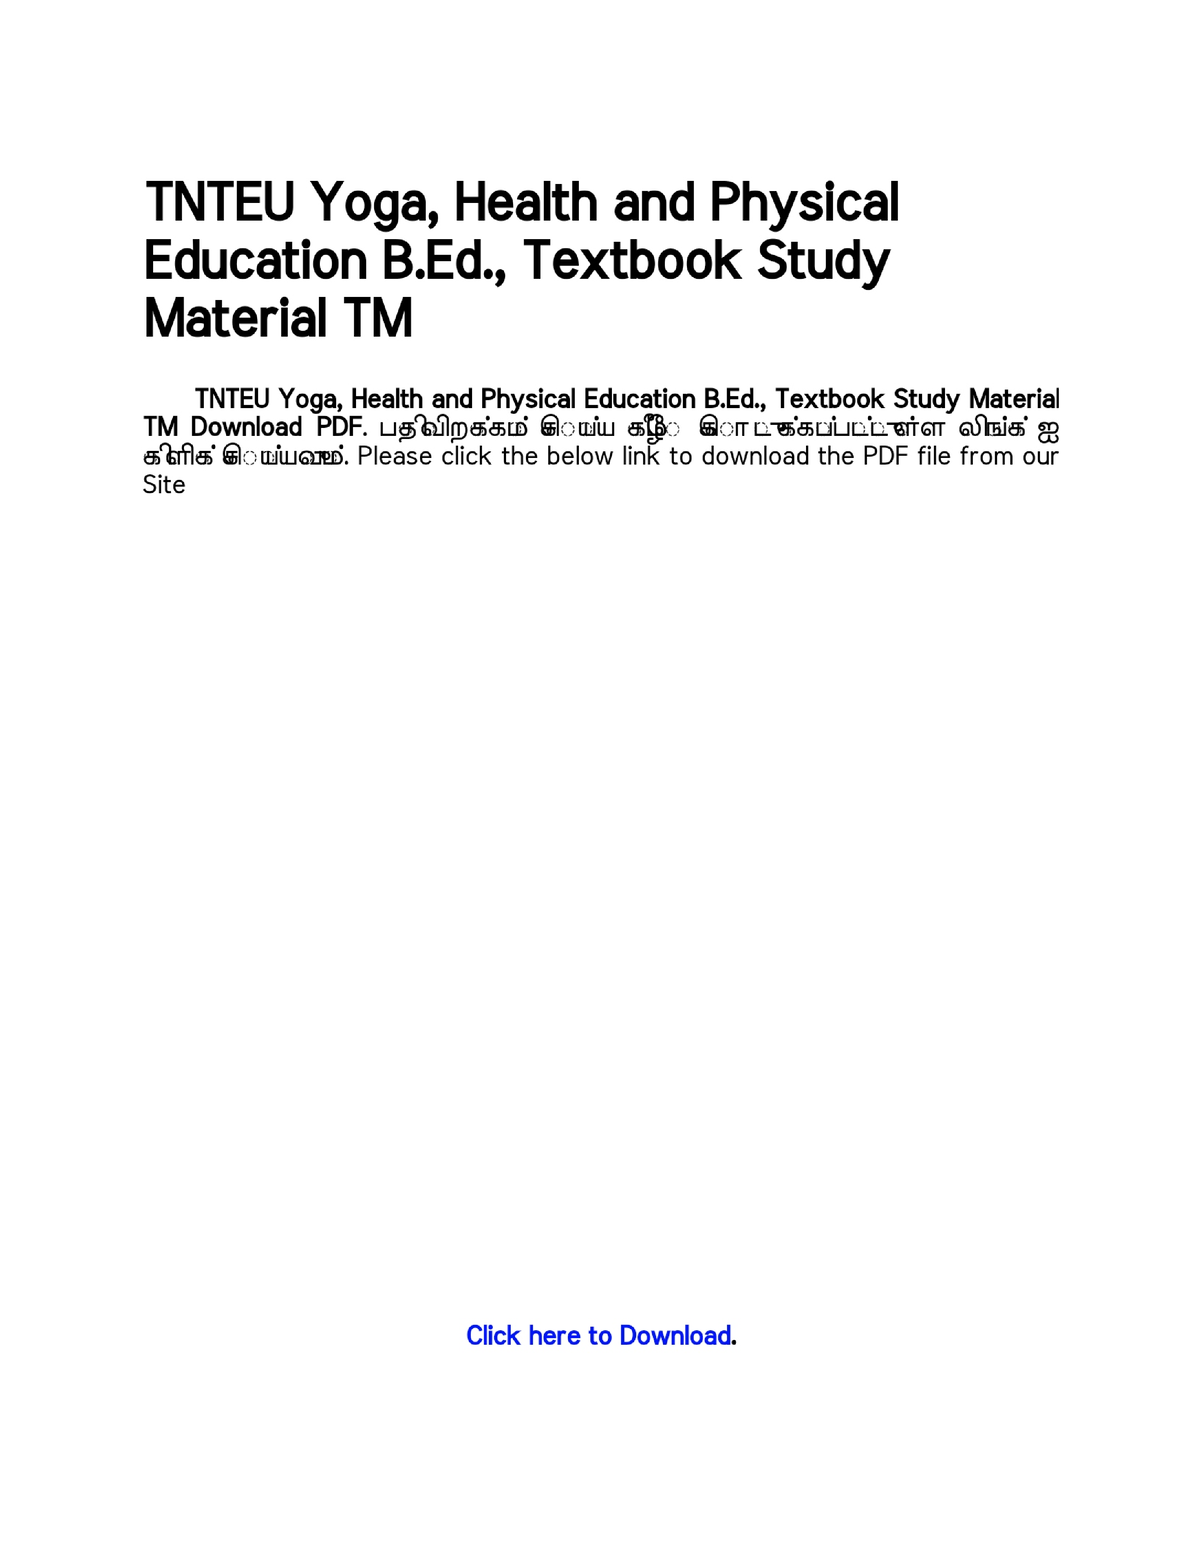 Tnteu Yoga, Health and Physical Education B.Ed., Textbook Study